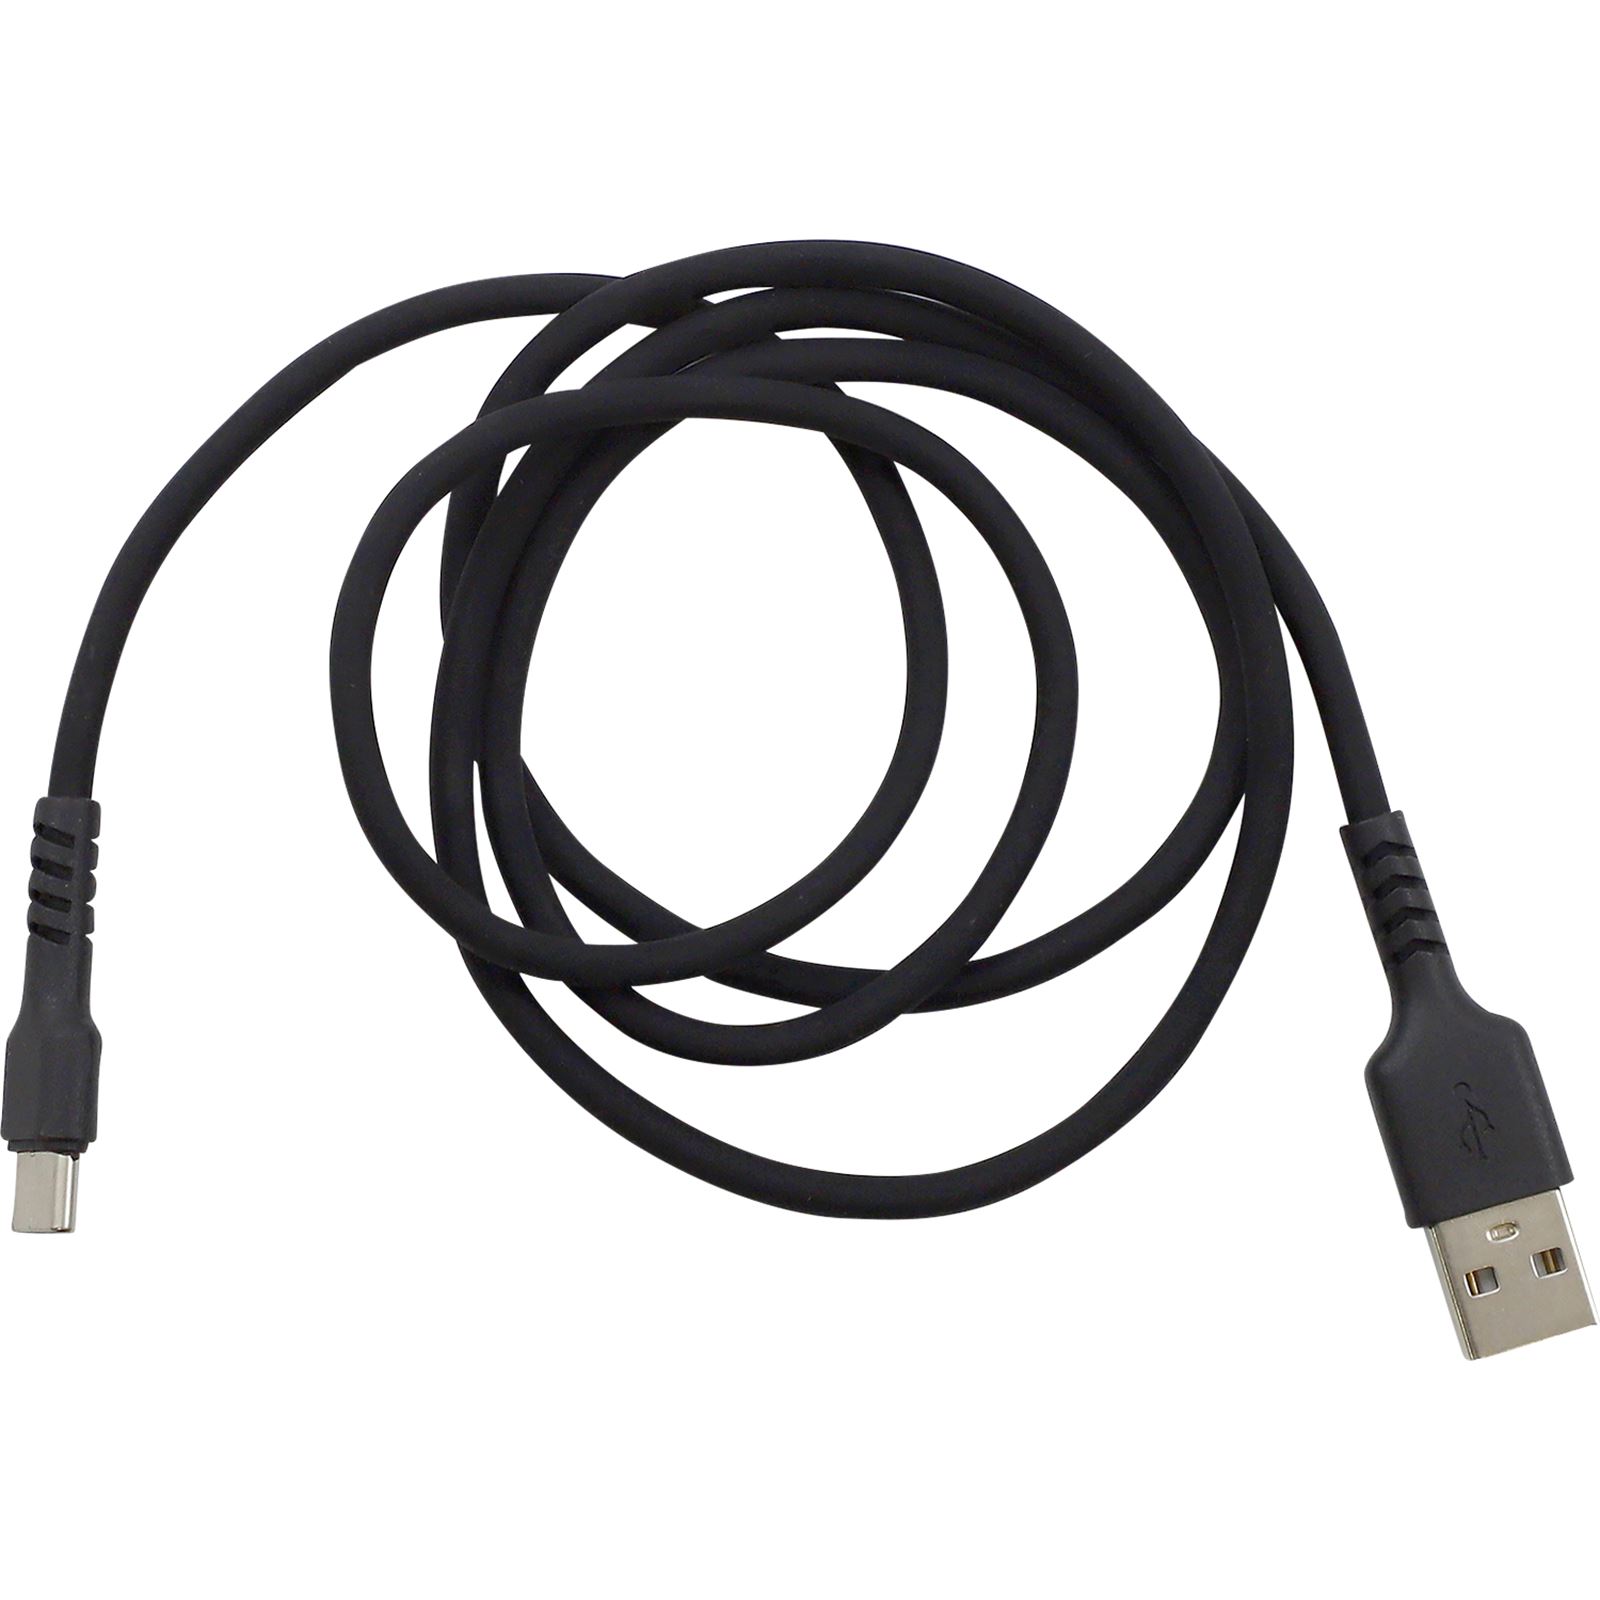 USBC cable - Cardo Systems